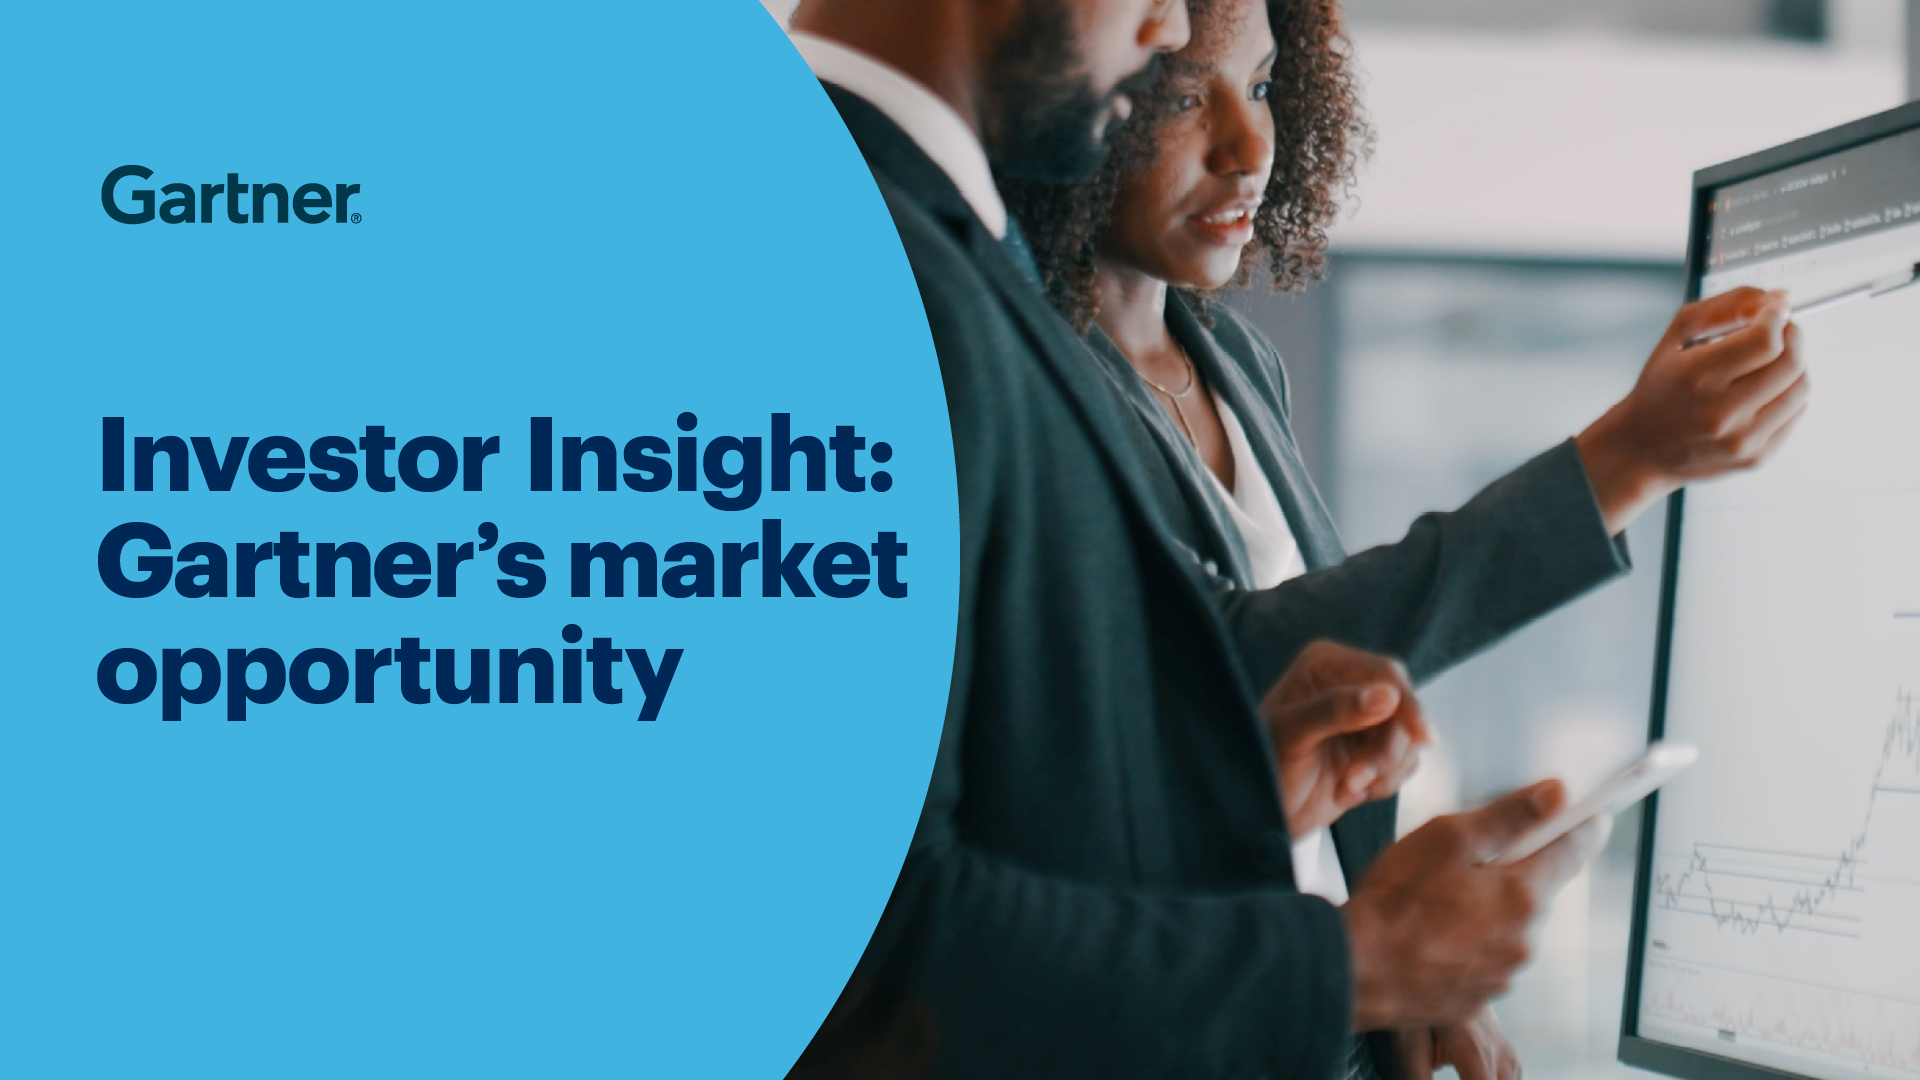 
Investor Insight: Gartner's market opportunity